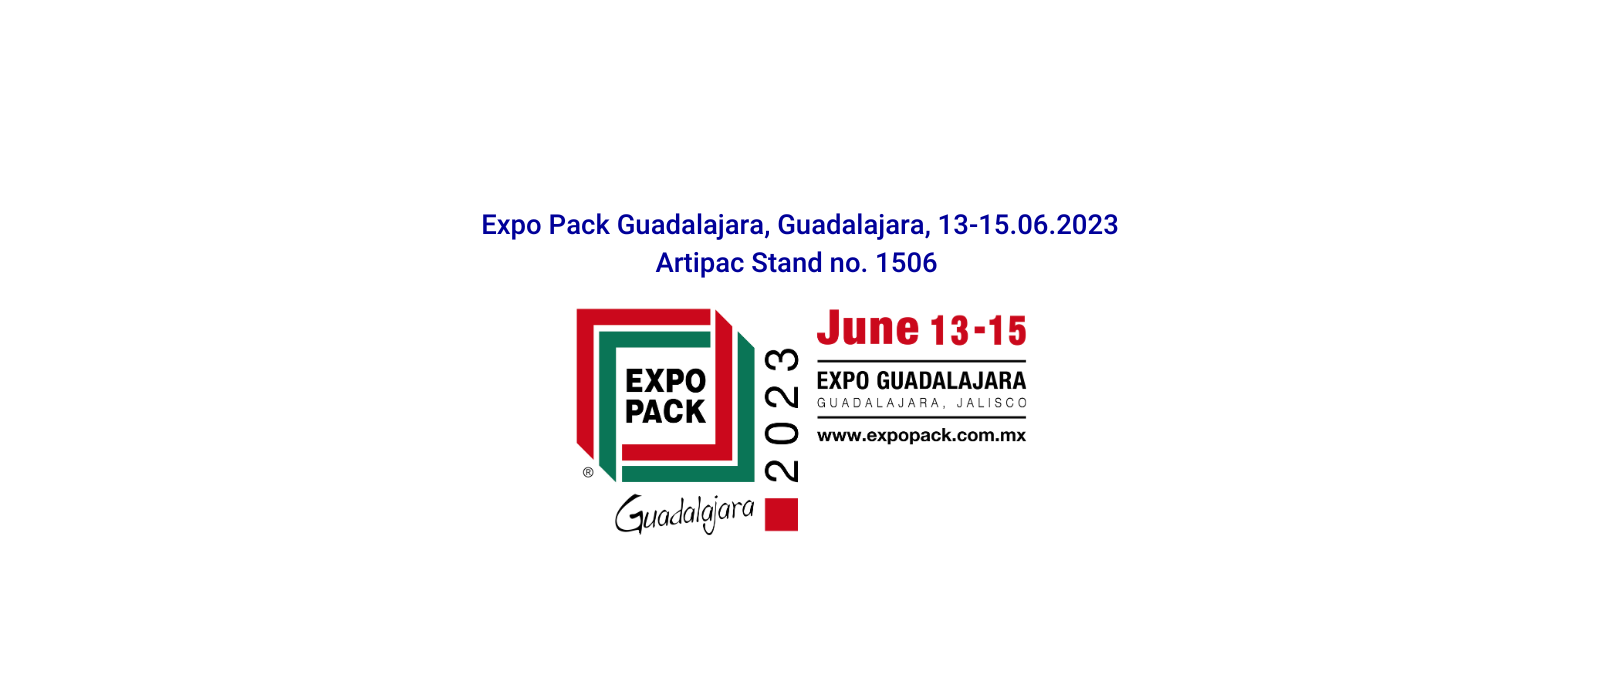 Appointment at Expo Pack Gadalajara for Fabbri Group